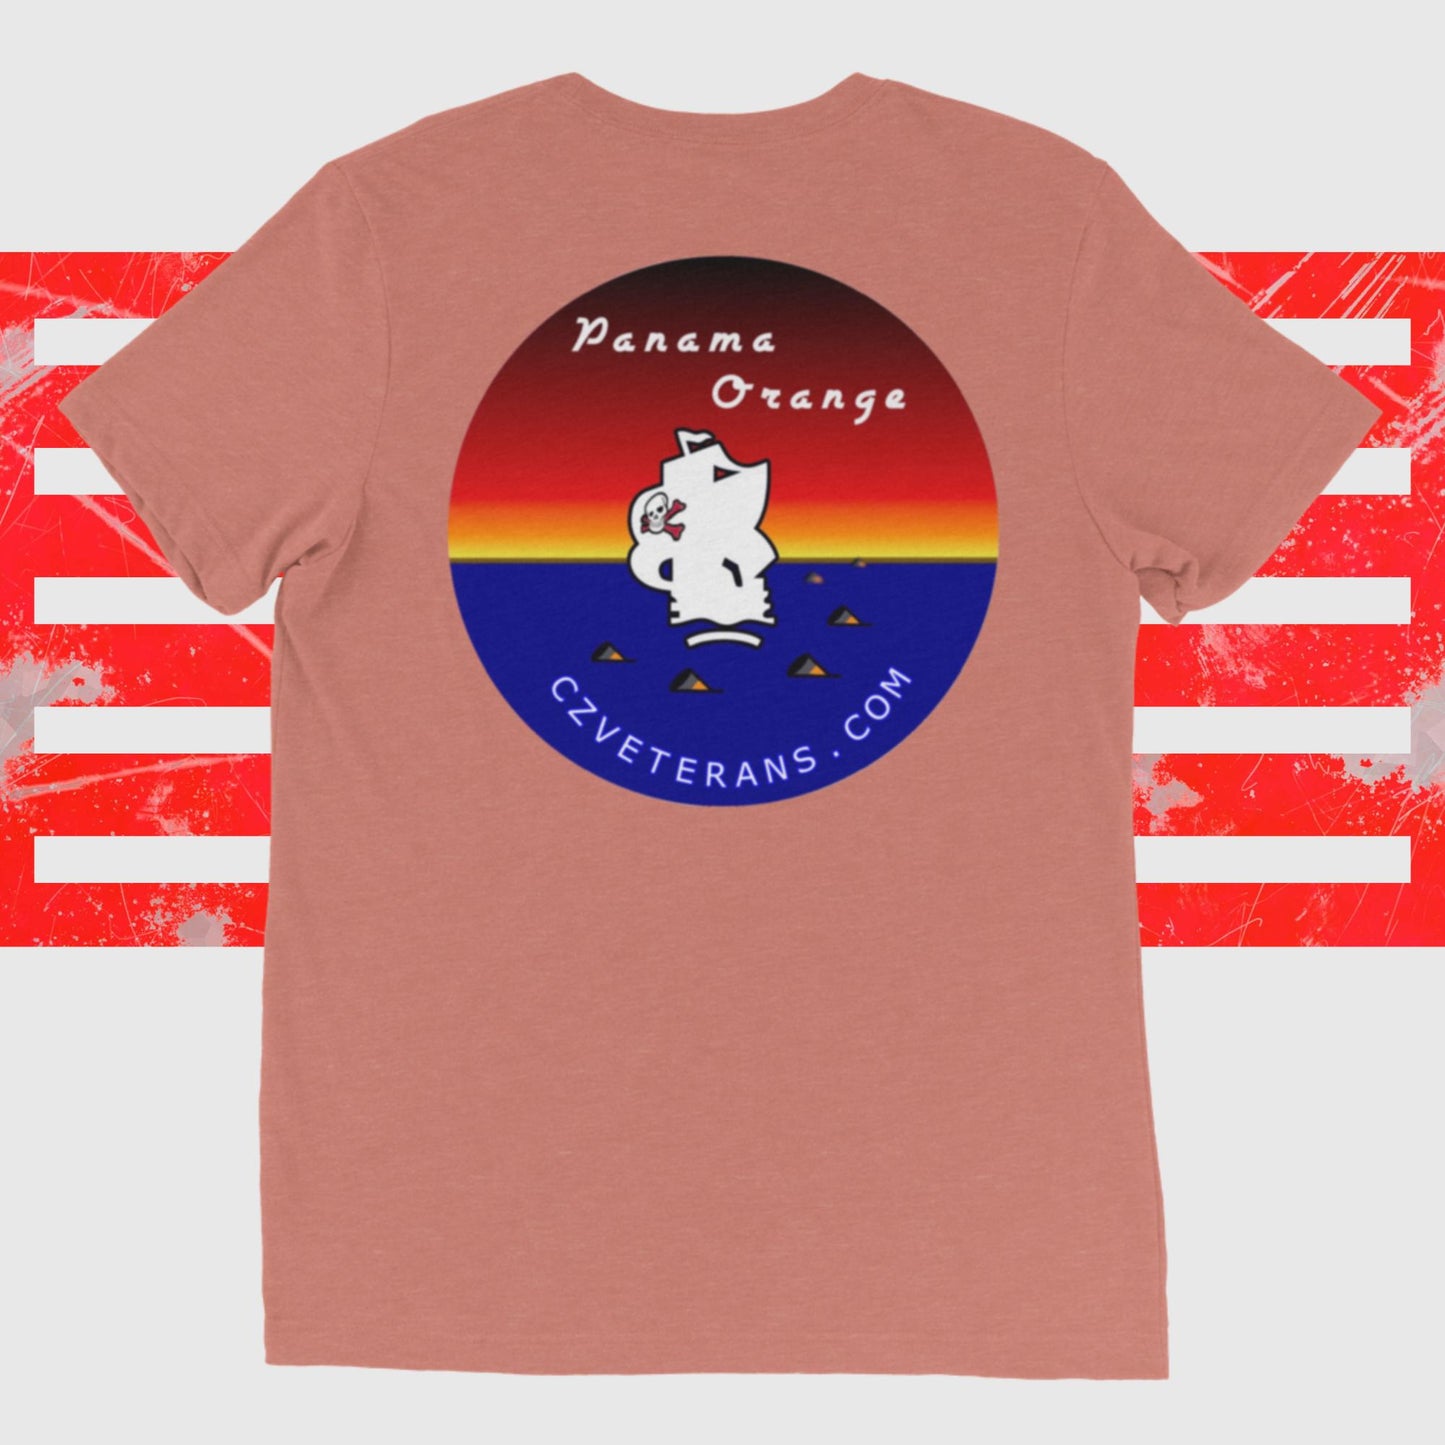 Panama Canal Zone Veterans - Short sleeve t-shirt